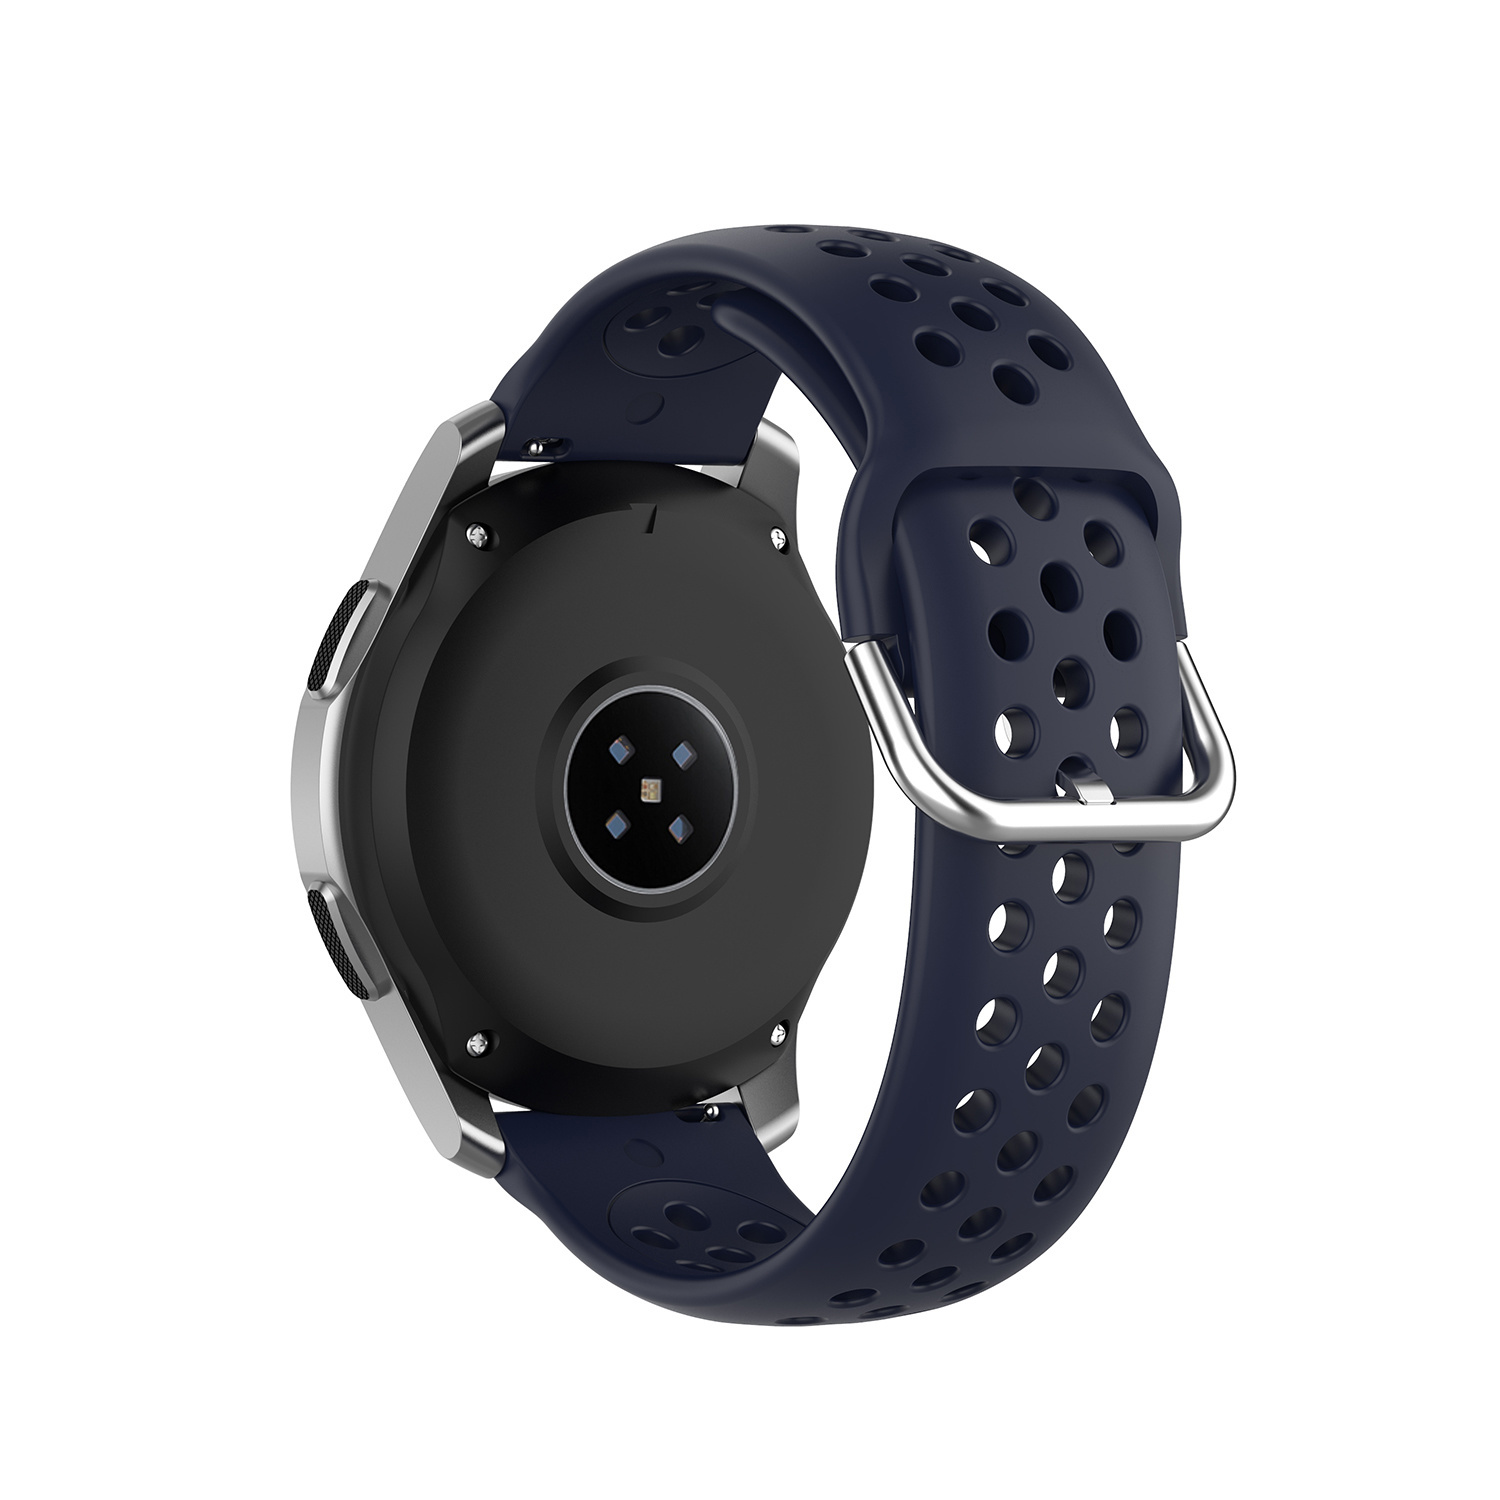 Huawei Watch GT Sport dupla csatos szalag - sötétkék